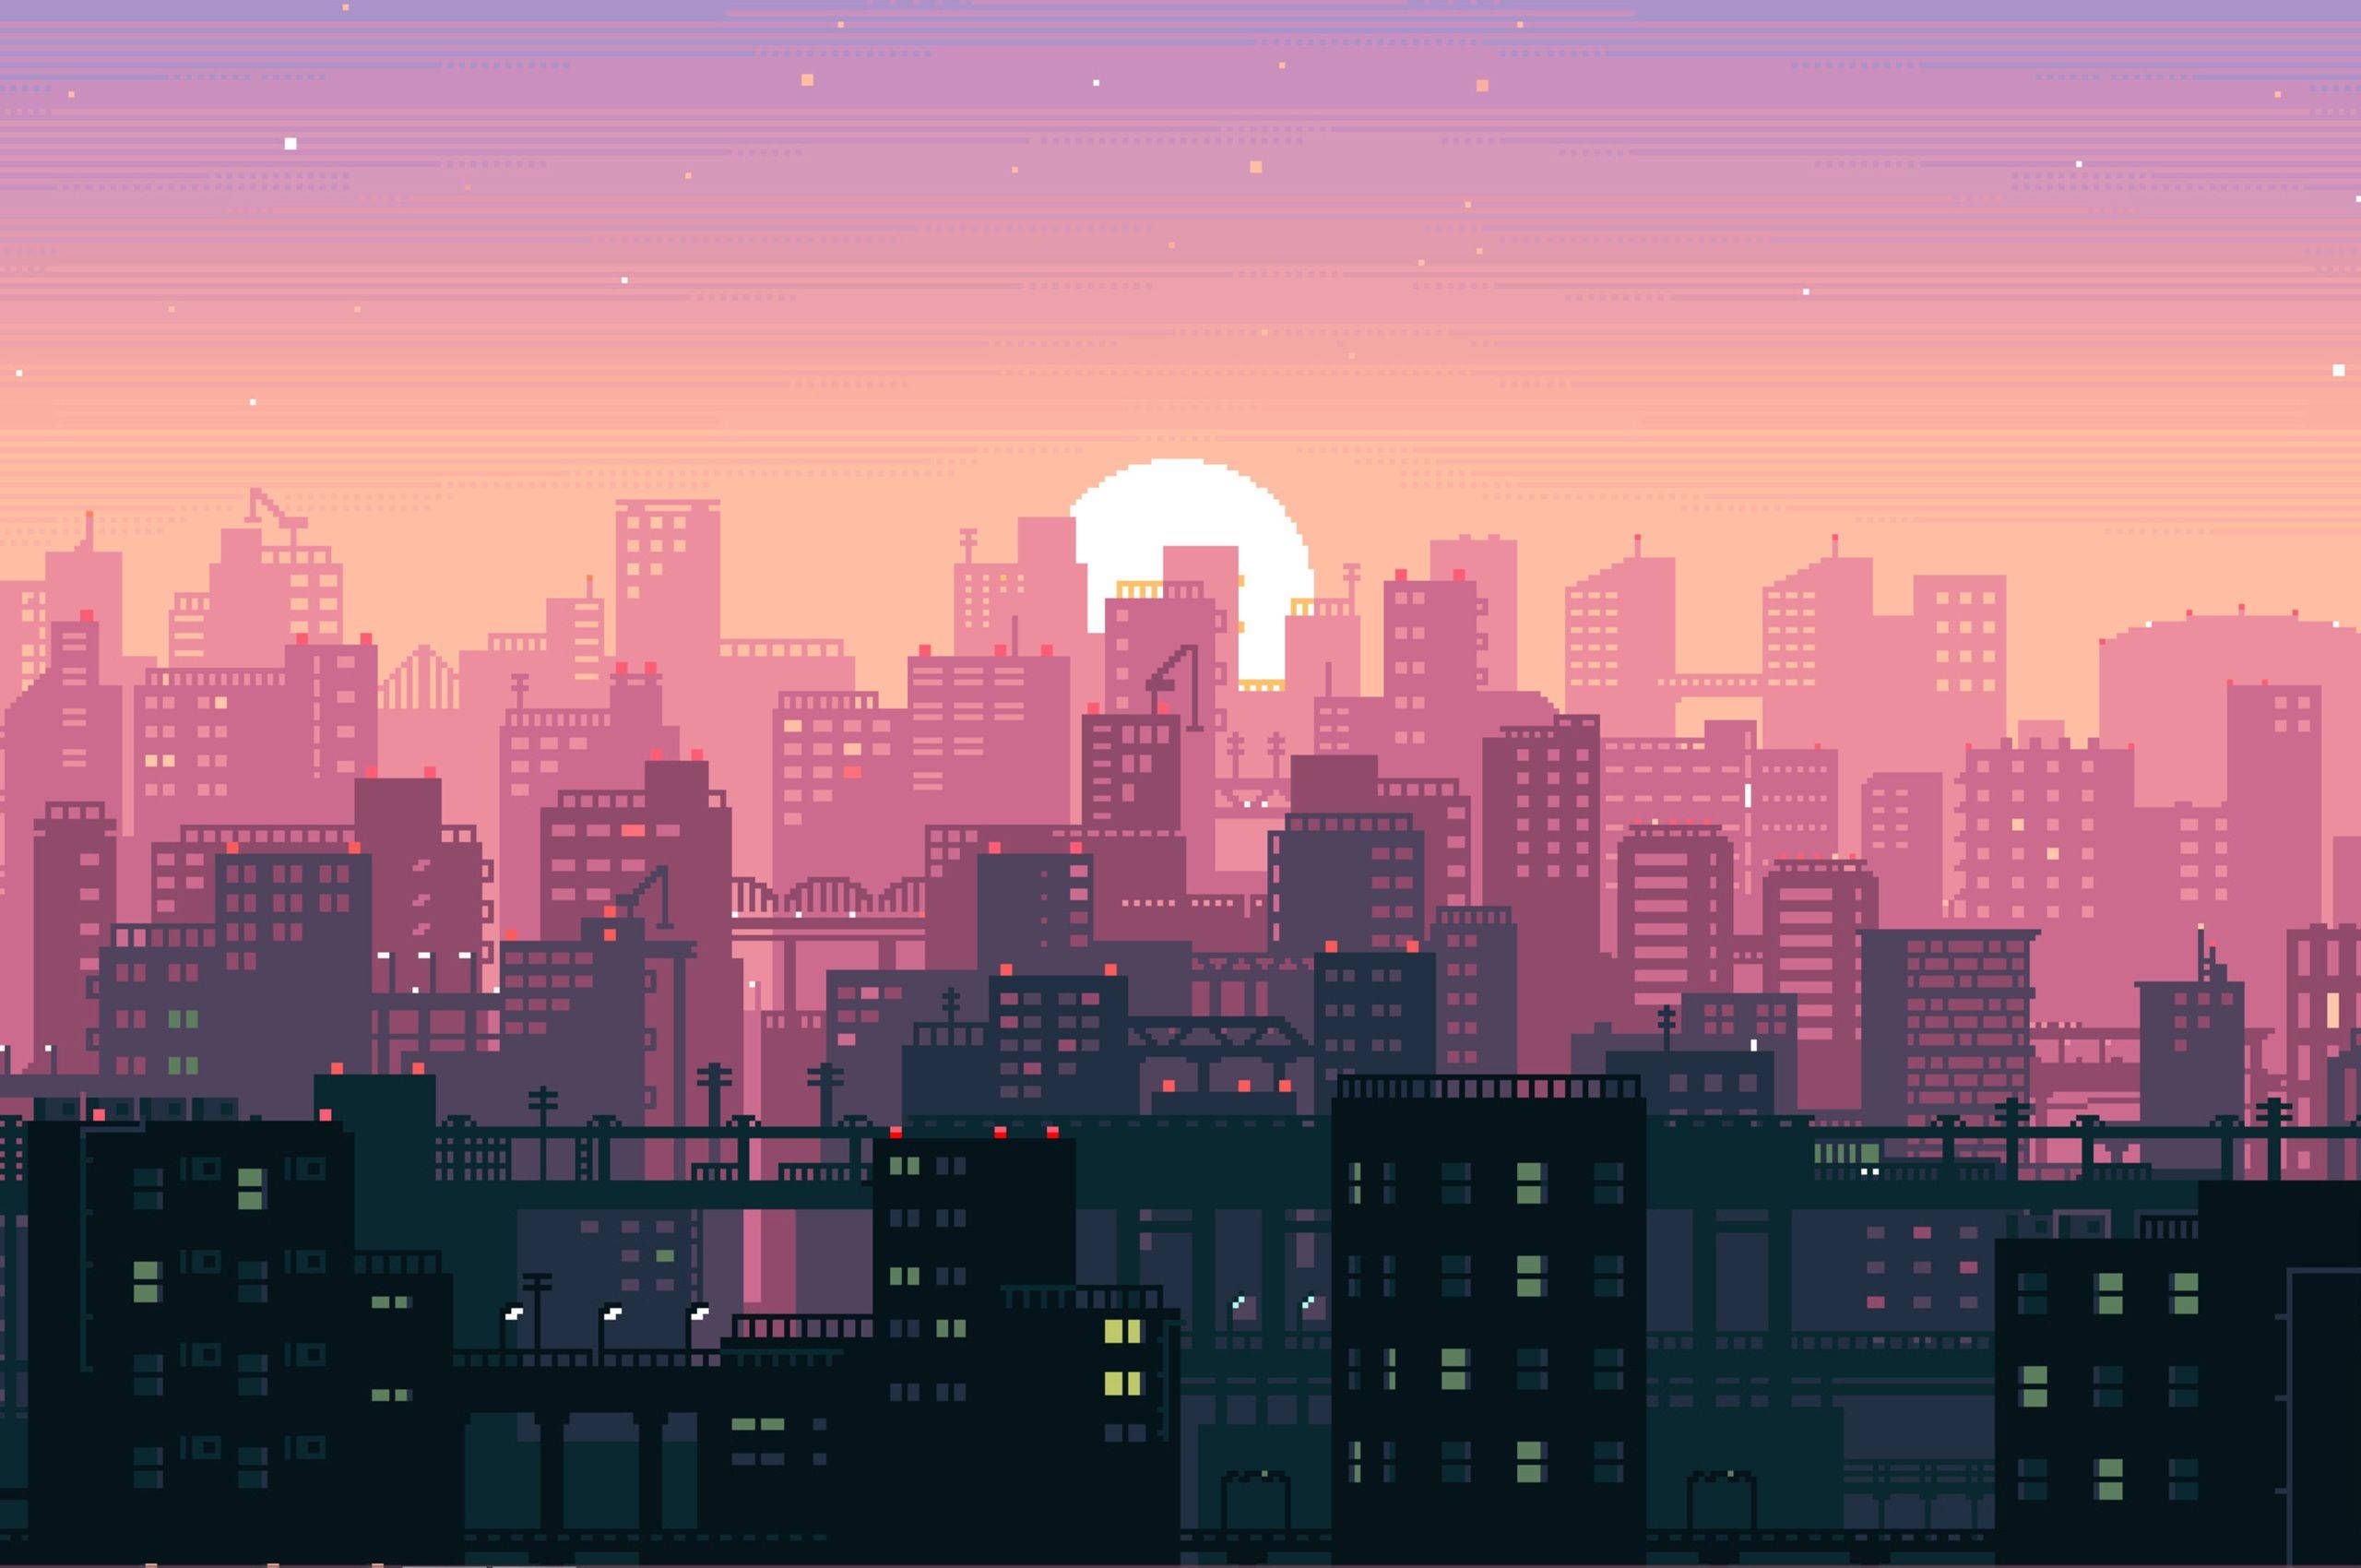 Pixel art of a city at sunset - City